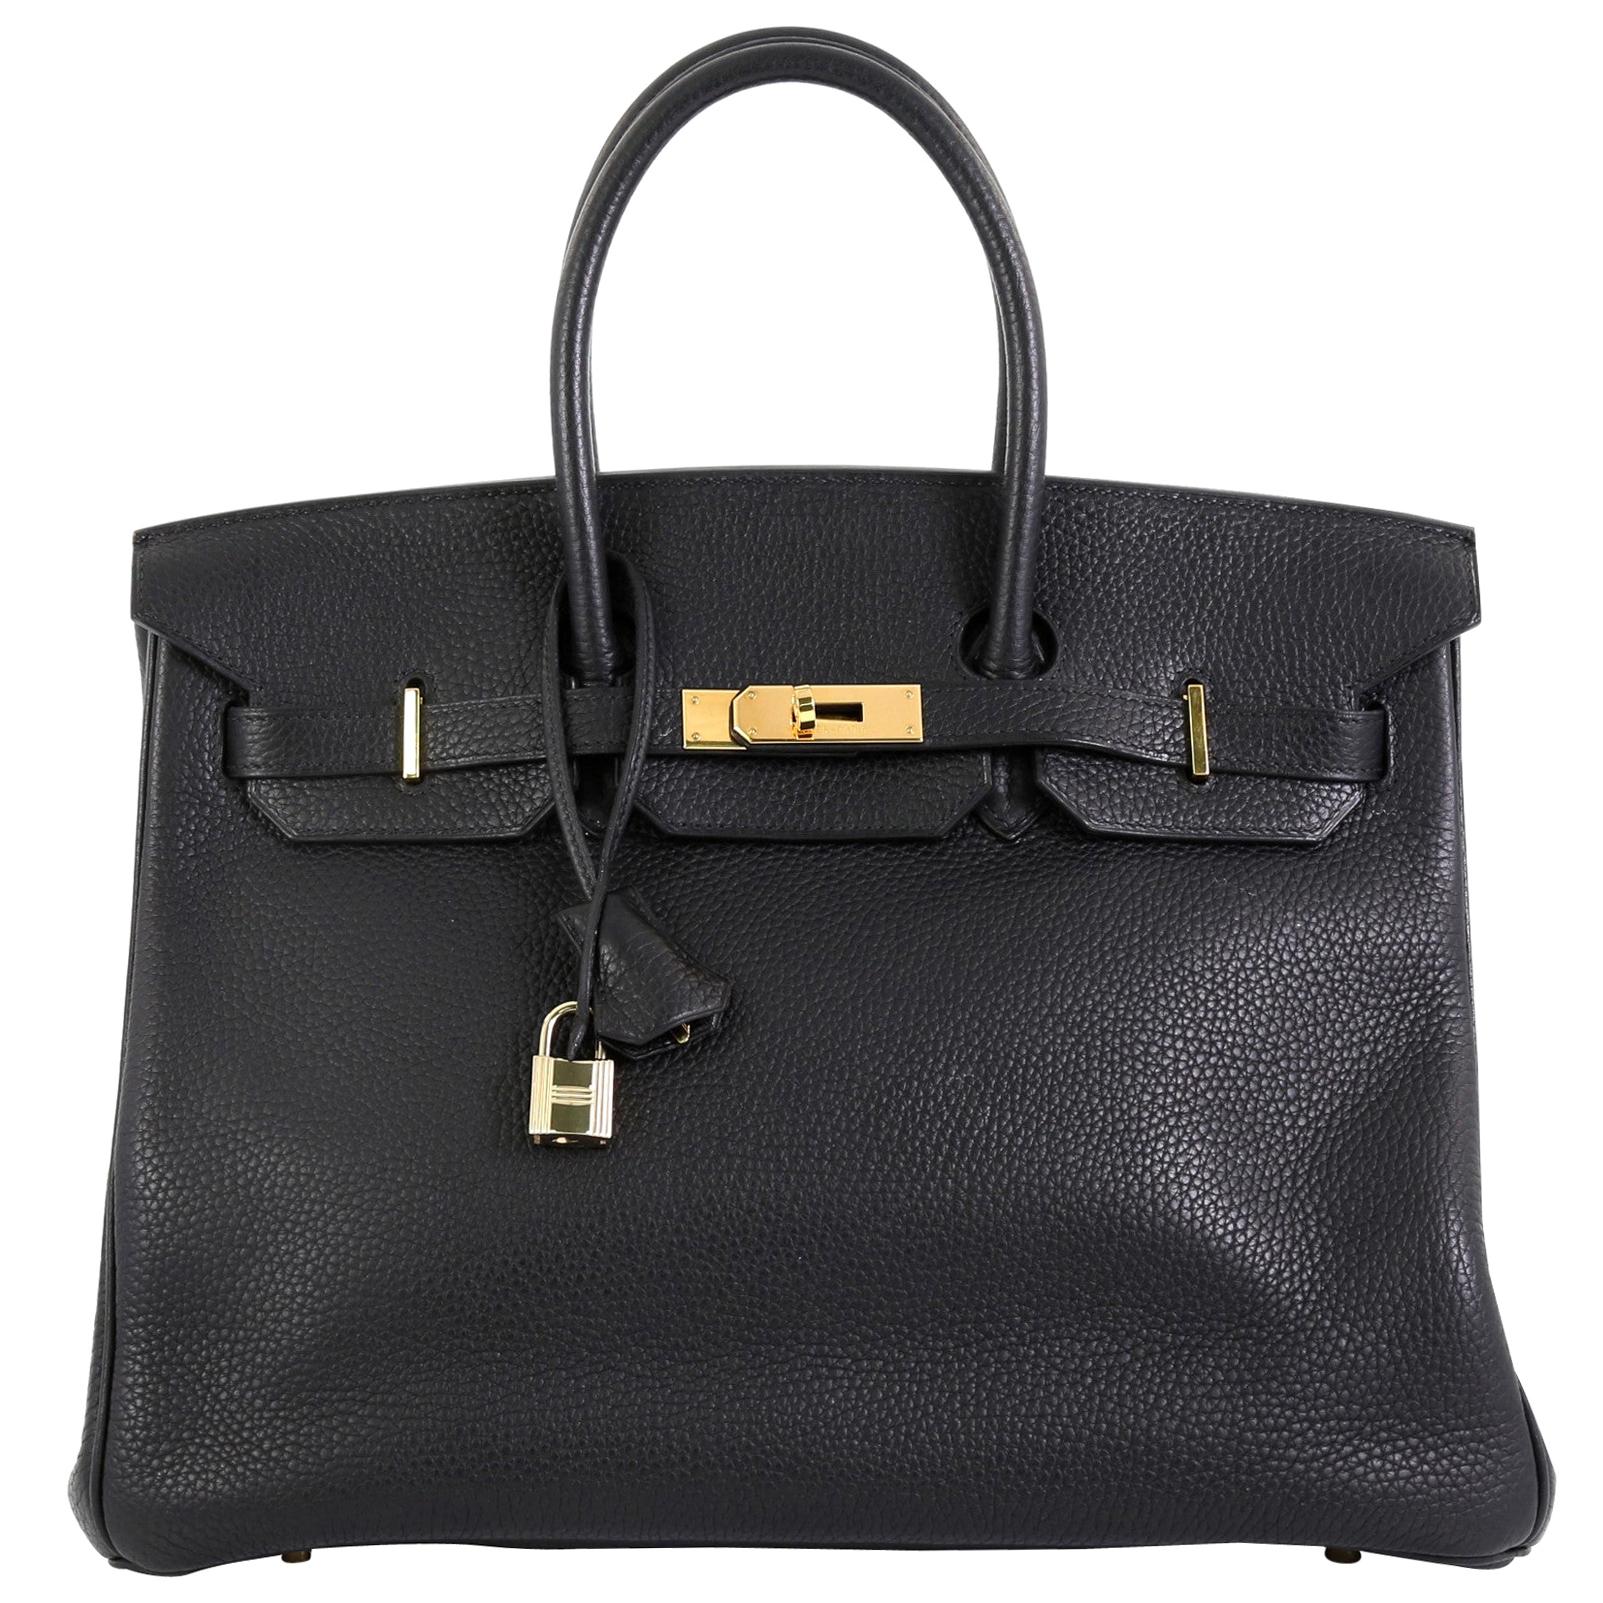 Hermes Birkin Handbag Noir Clemence with Gold Hardware 35